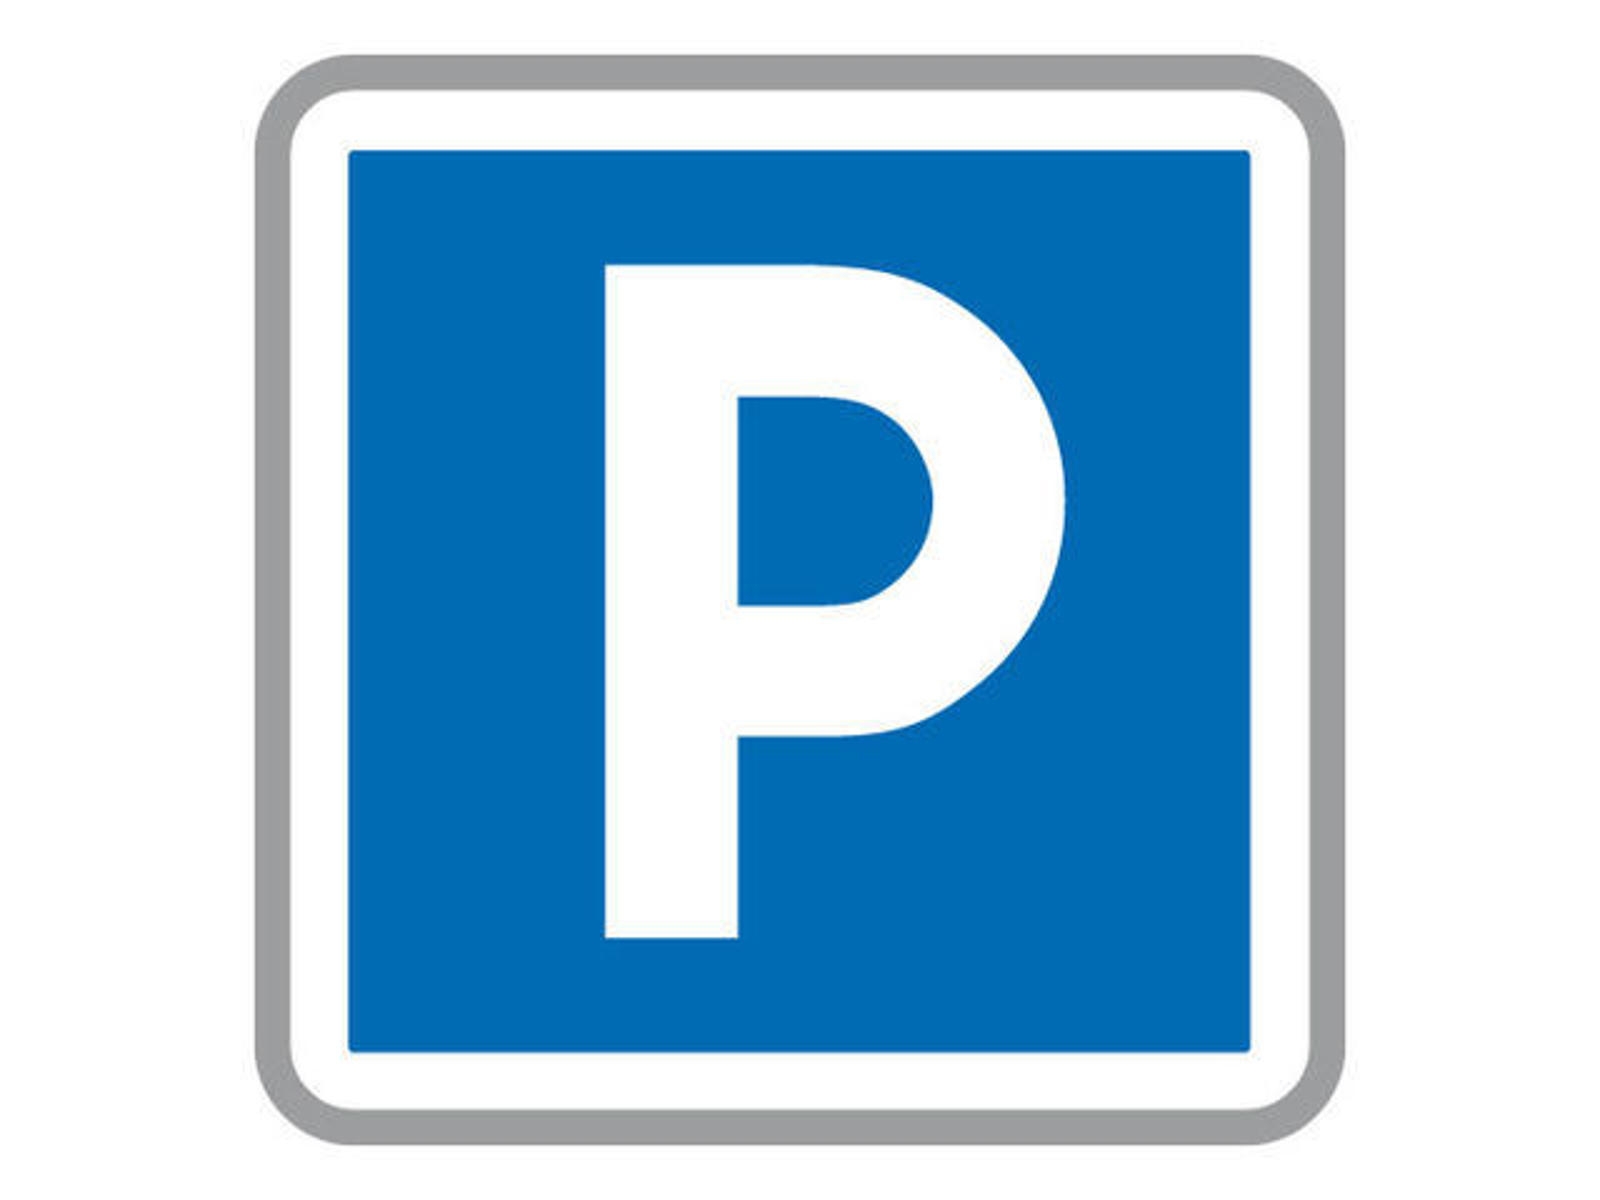 Parking te  koop in Sint-Lambrechts-Woluwe 1200 24000.00€  slaapkamers m² - Zoekertje 764462